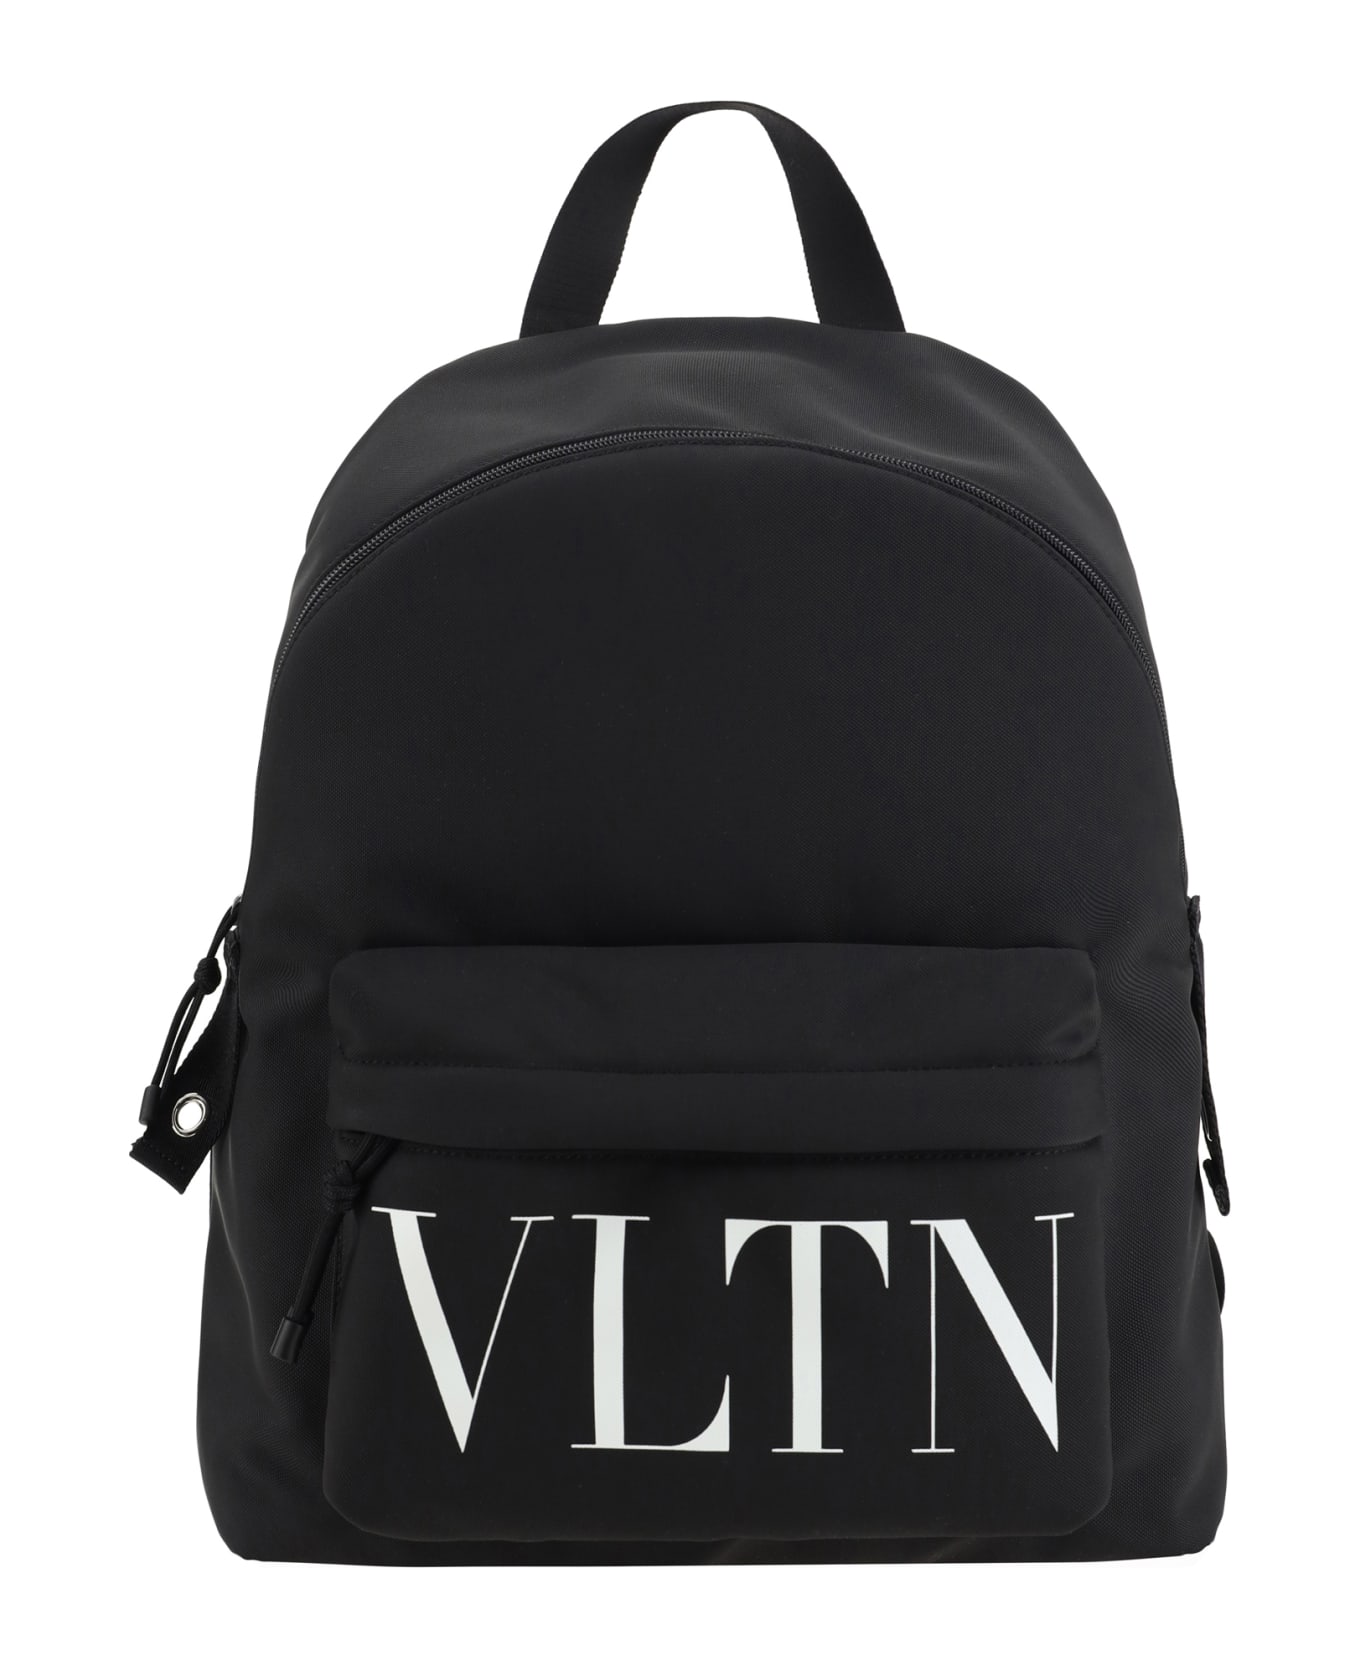 Valentino Garavani 'vltn' Backpack - Nero/bianco